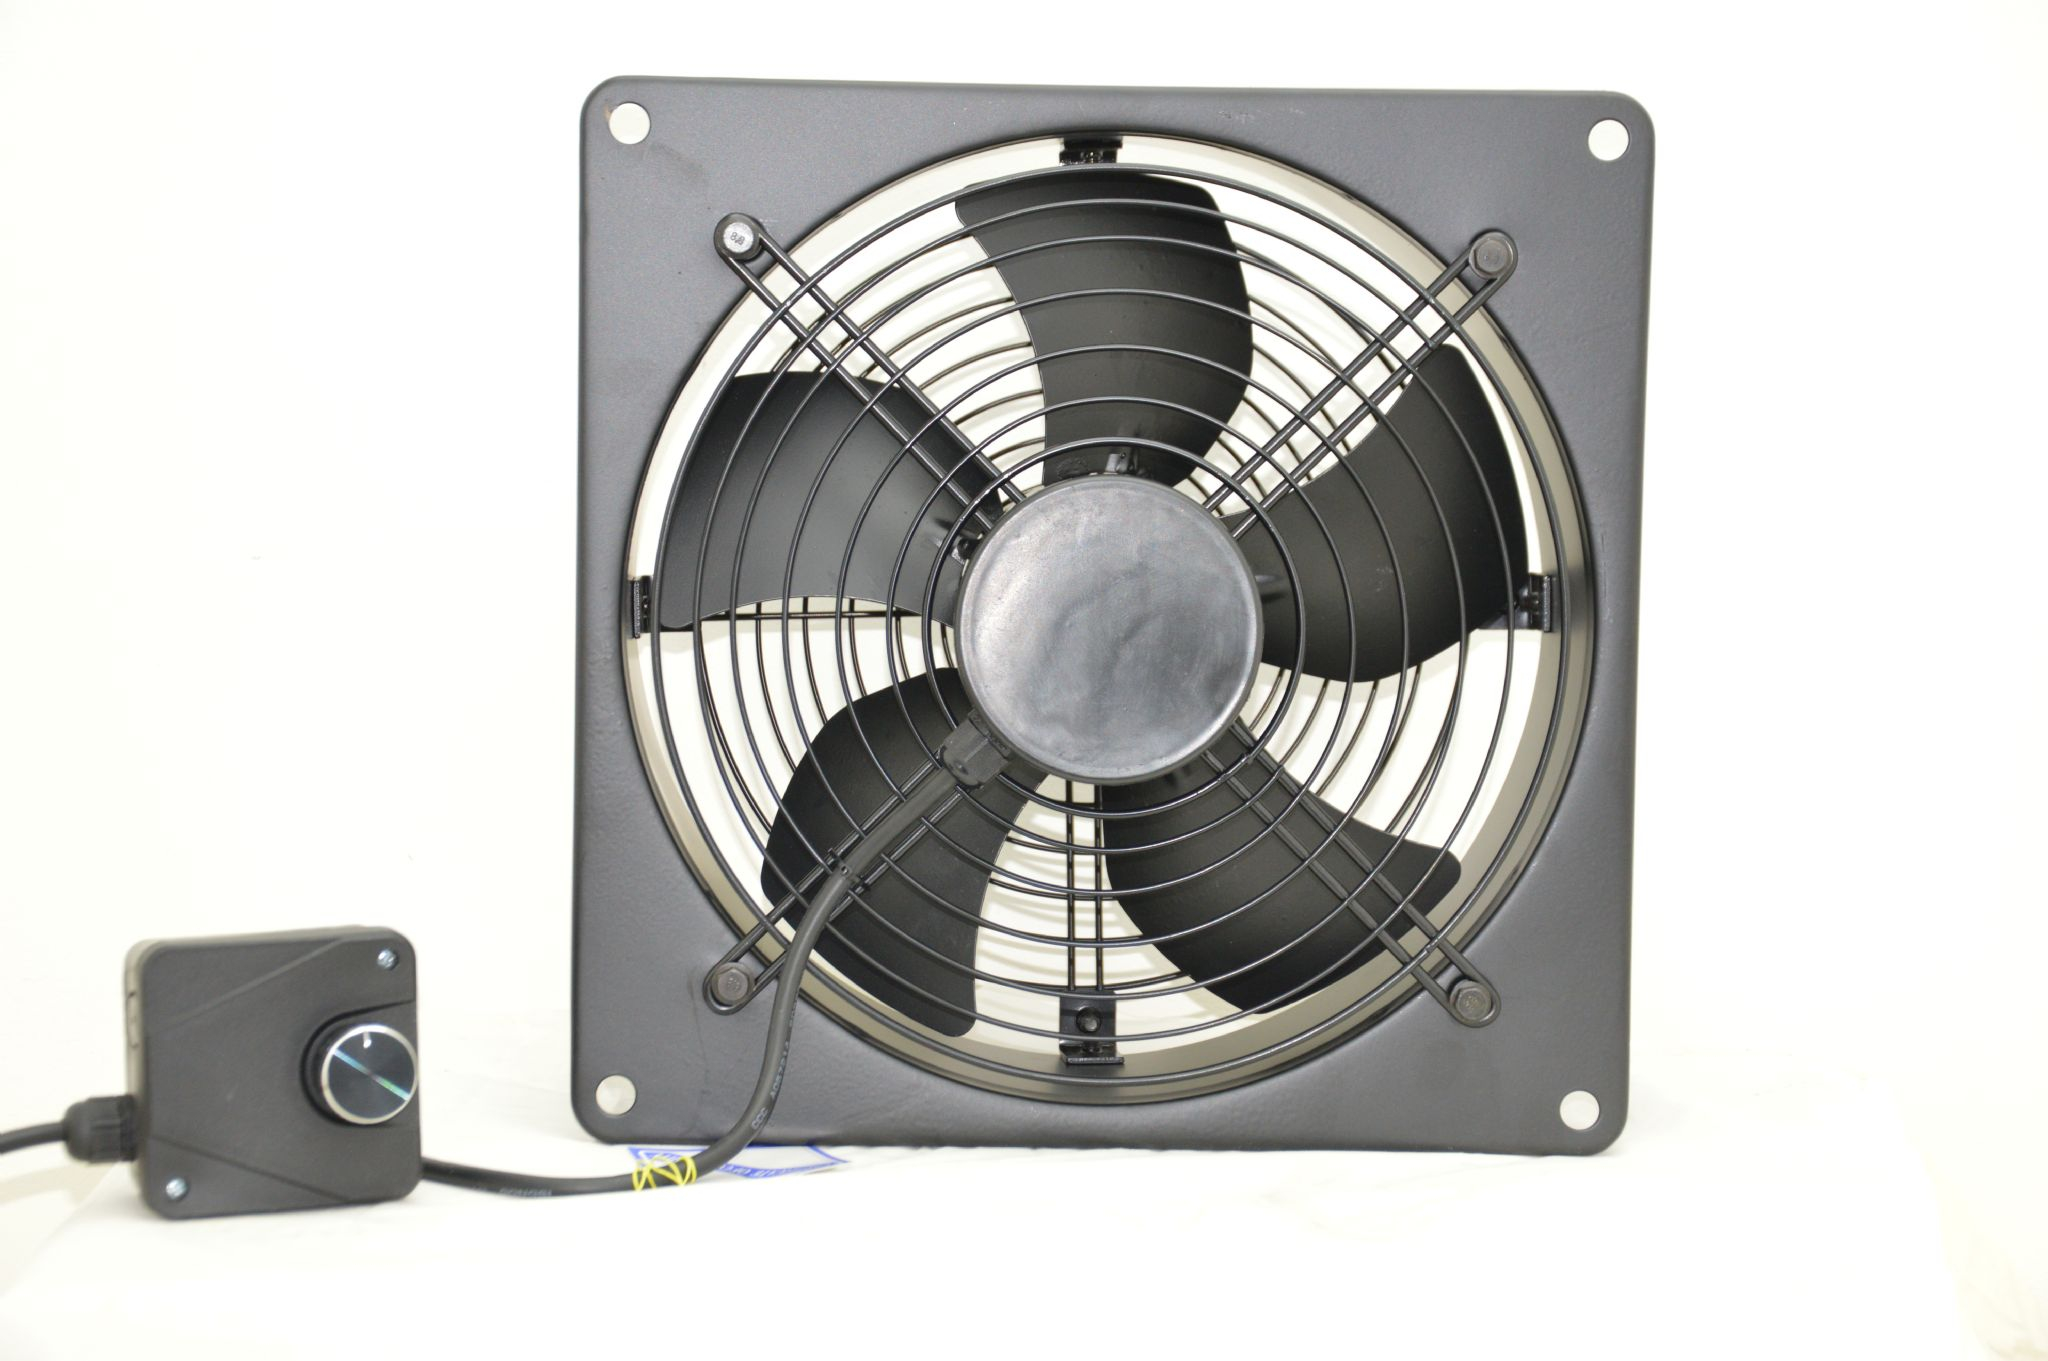 panasonic whisper wall mounted kitchen extractor fan